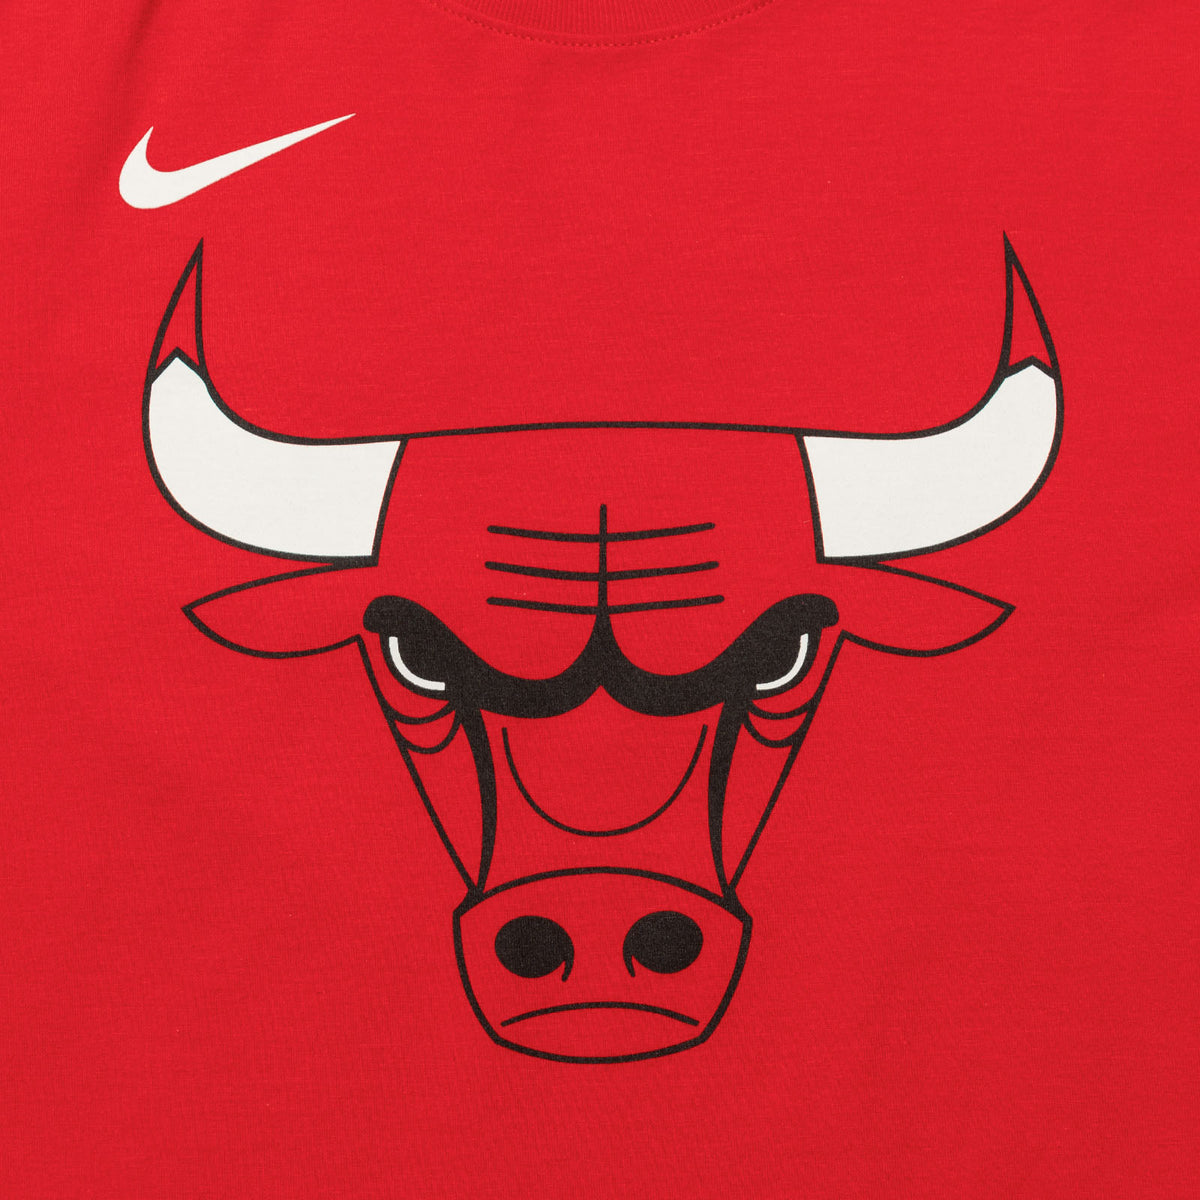 Chicago Bulls Icon NBA Logo T-Shirt - Red